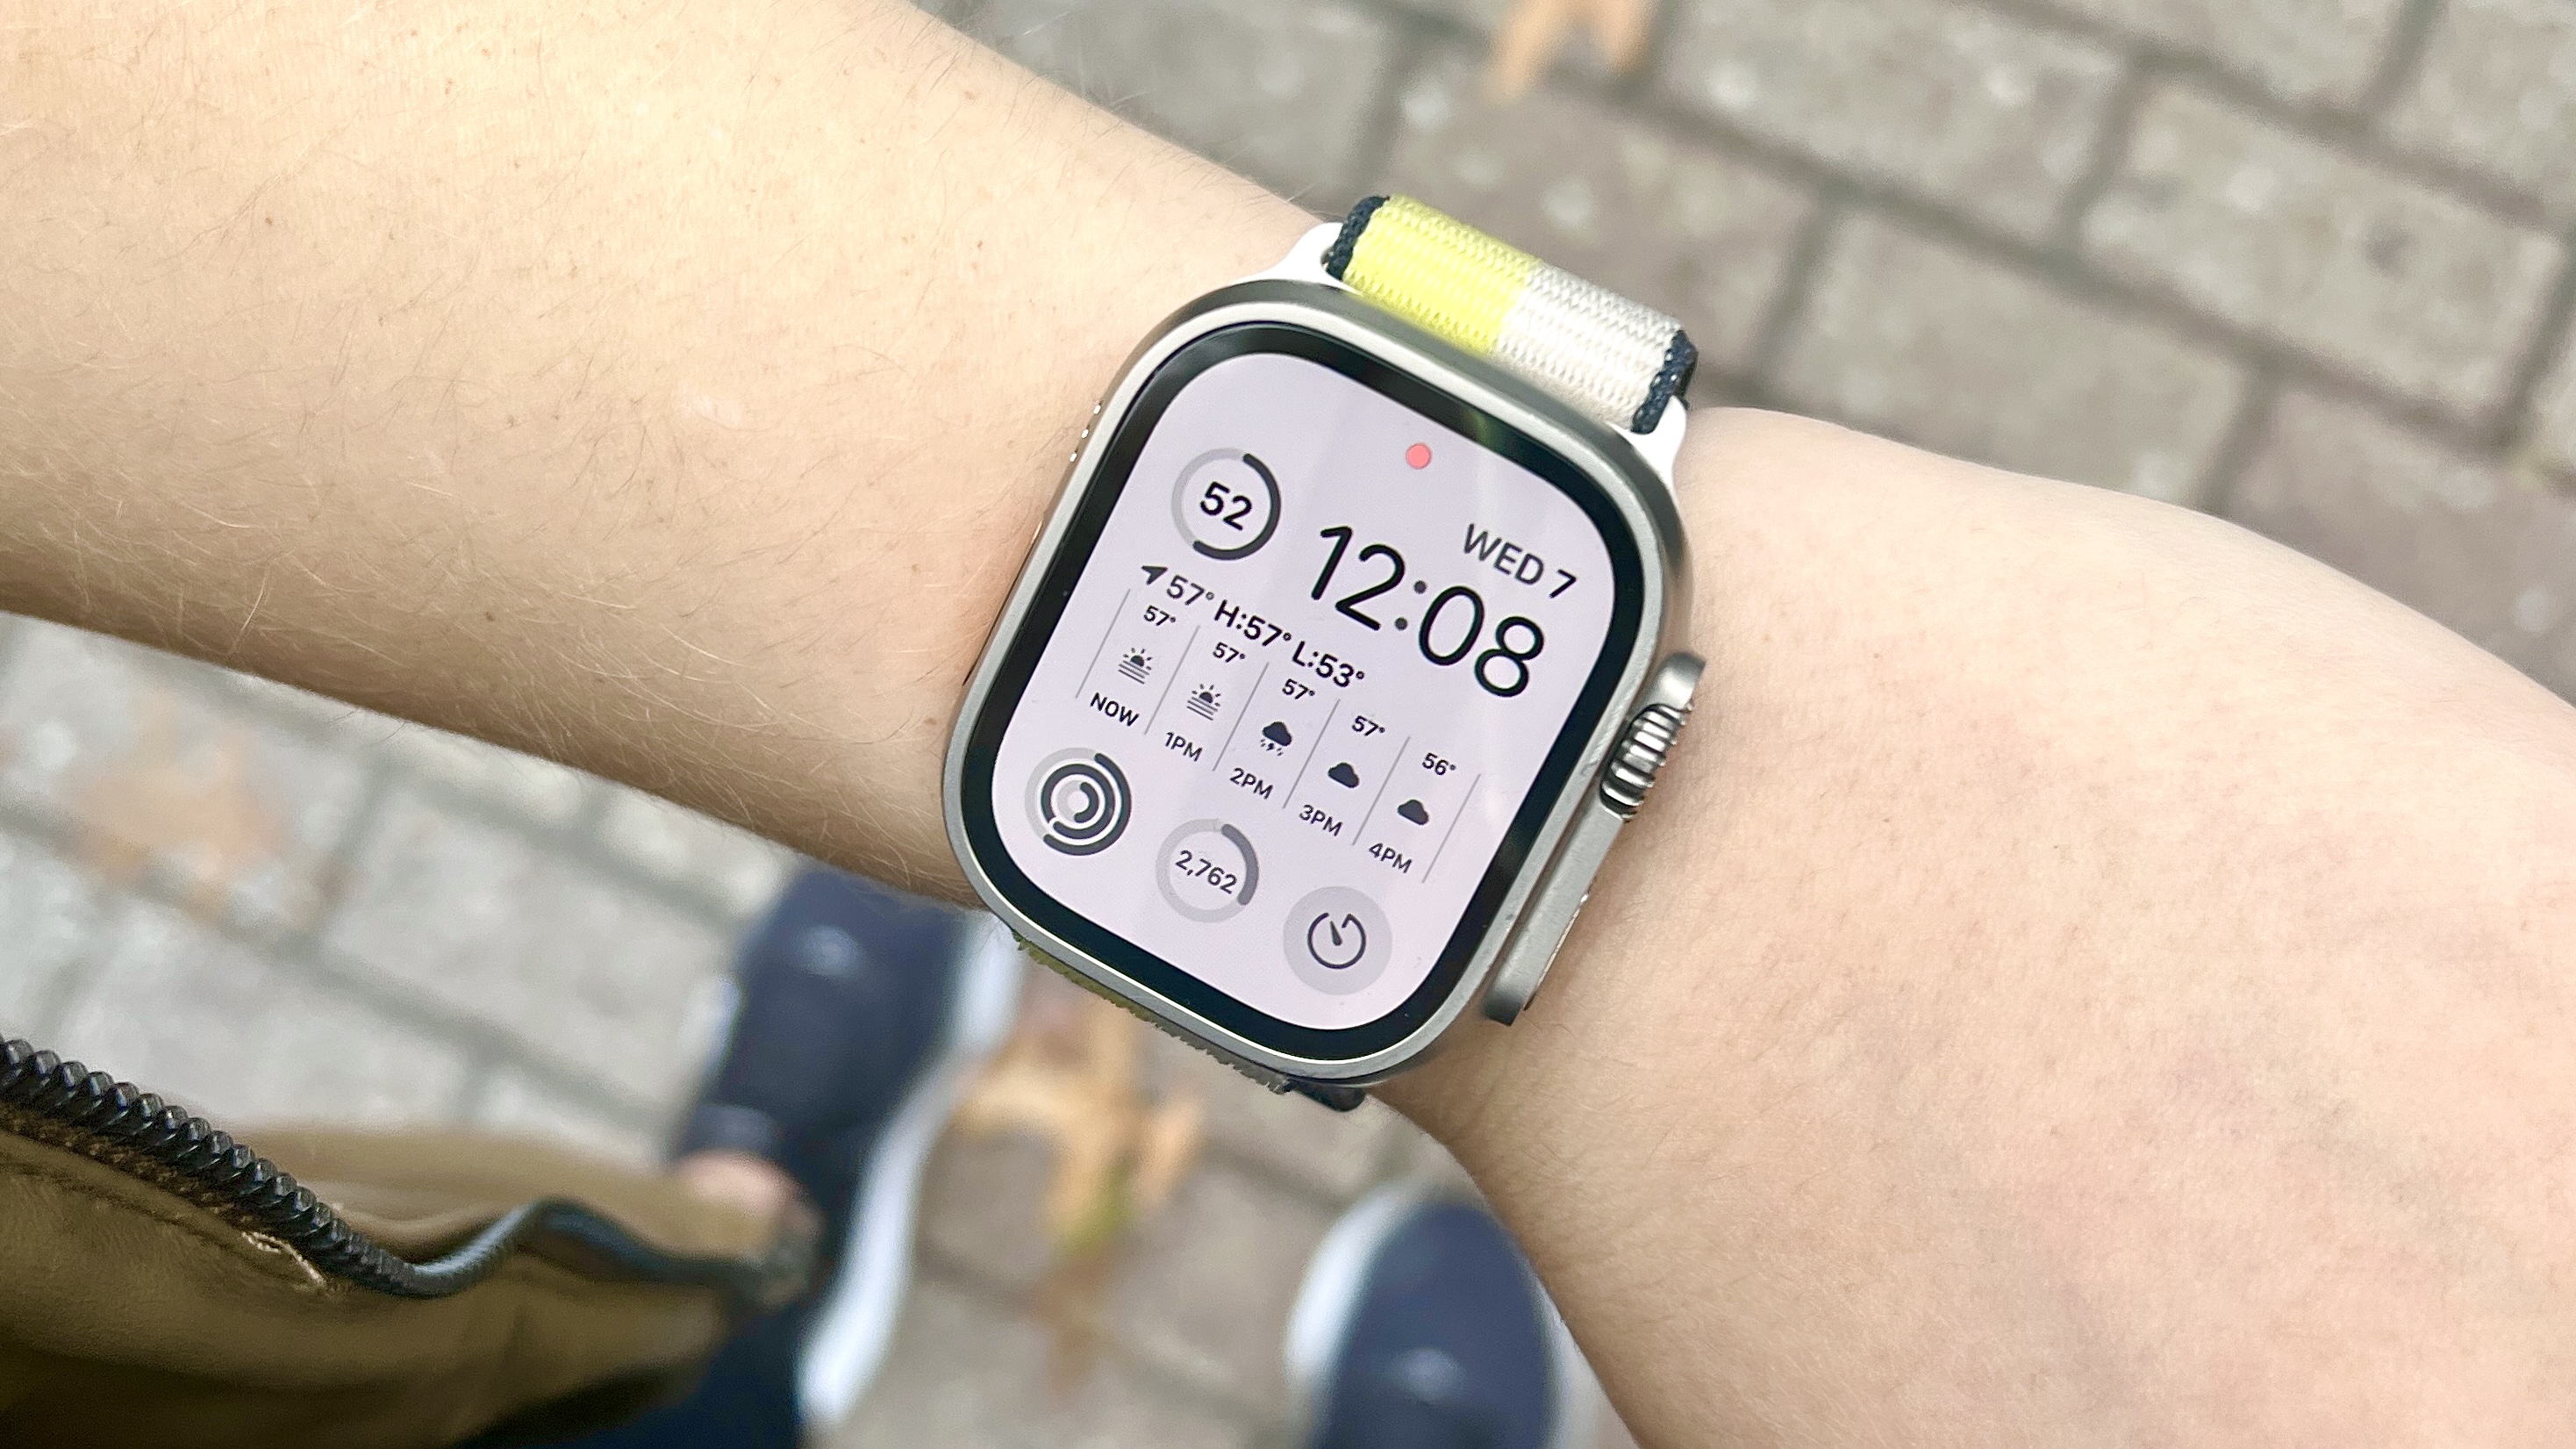 Apple Watch SE hands-on: The ‘greatest hits’ wearable | LaptrinhX